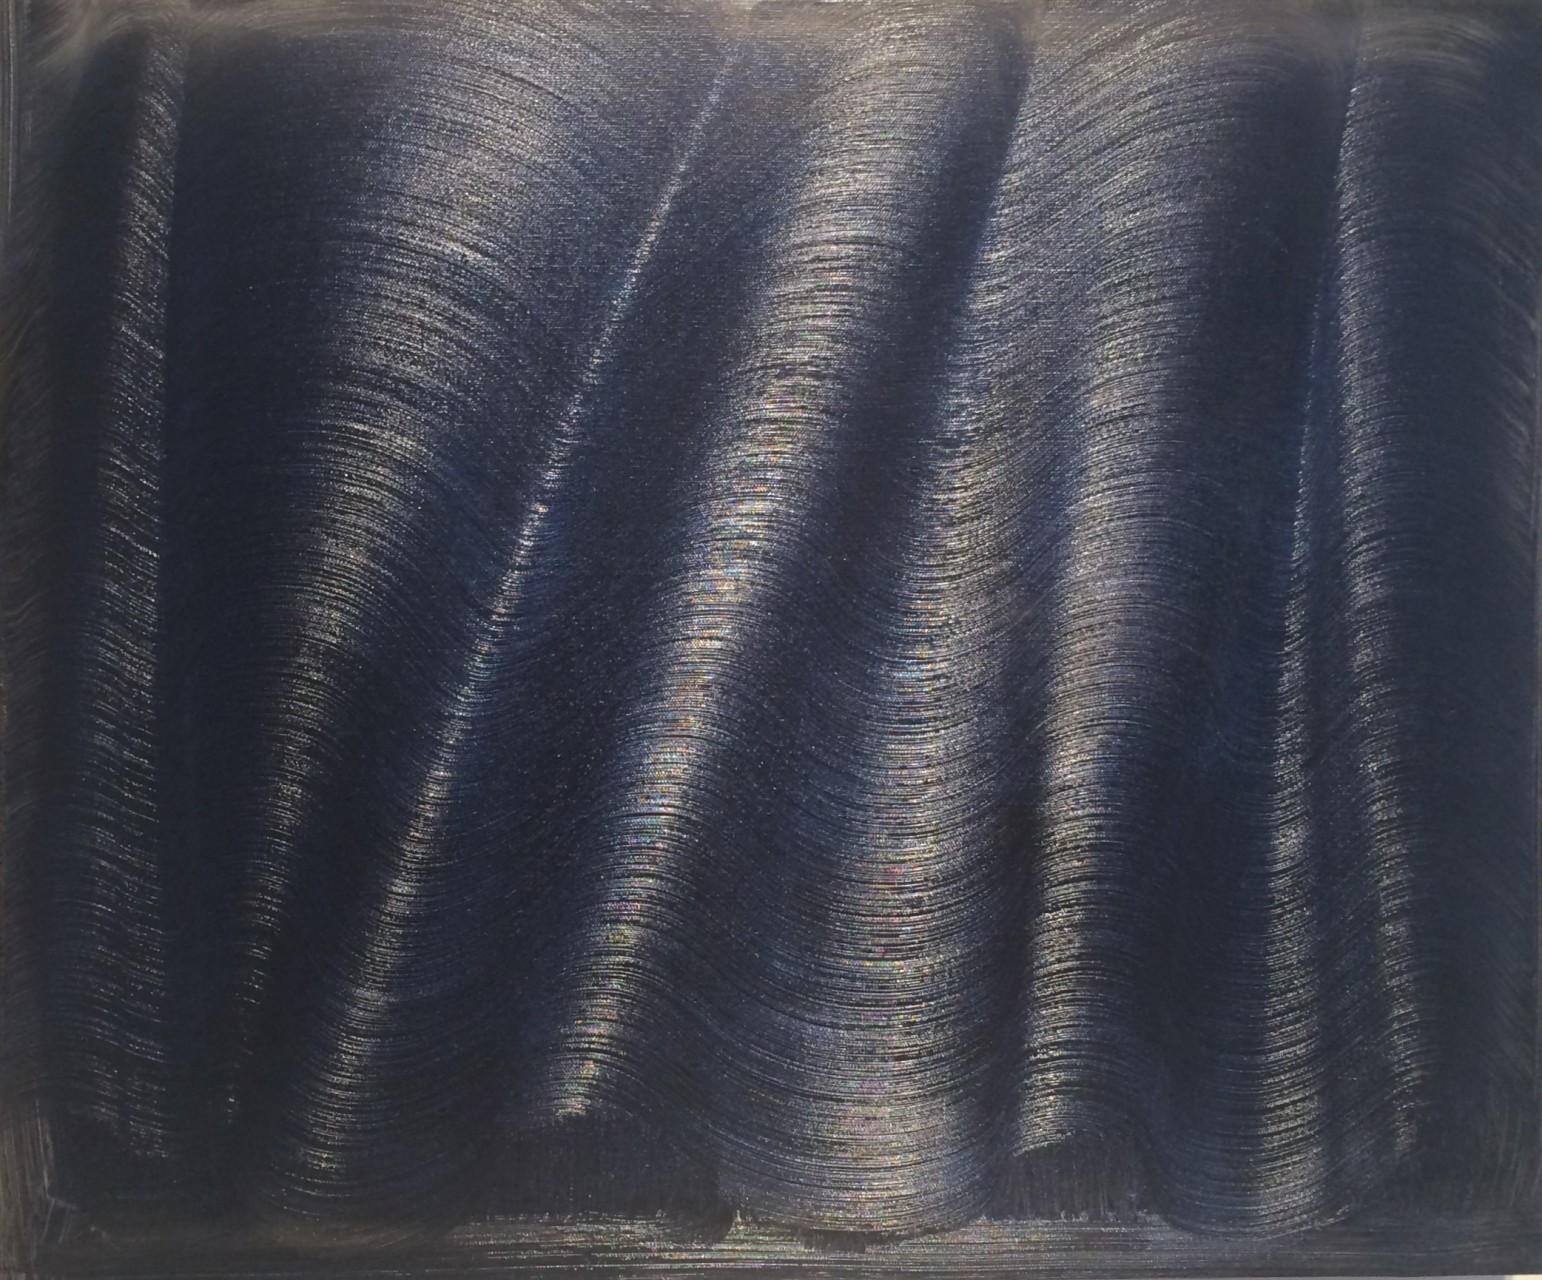 Wavelength 20” x 24” oil on canvas